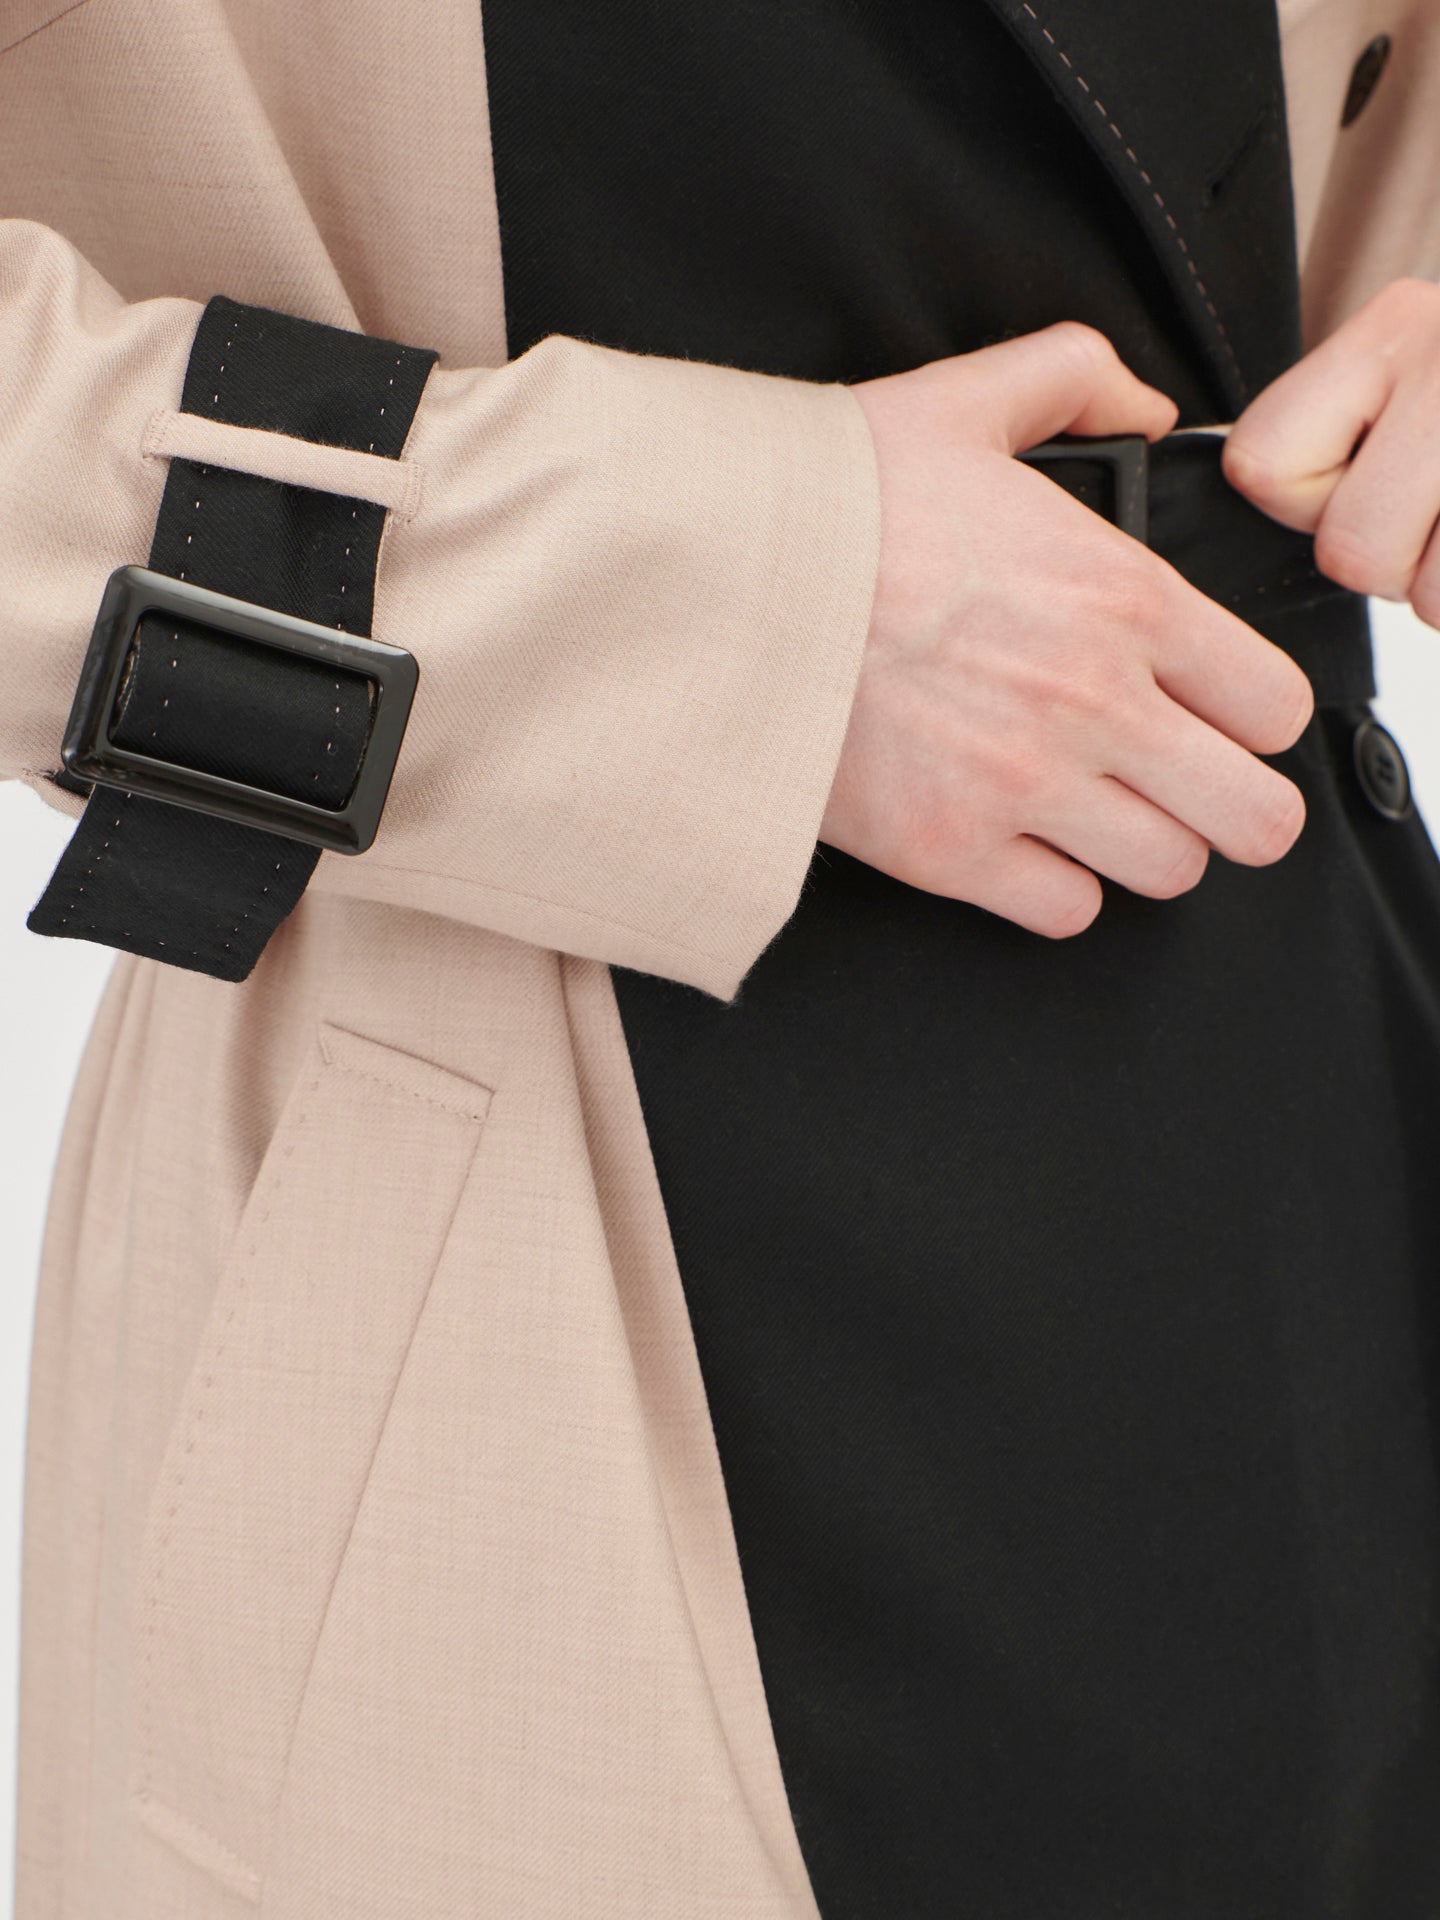 Women's Cashmere Contrast Panel Trench Coat Rose Smoke - Gobi Cashmere